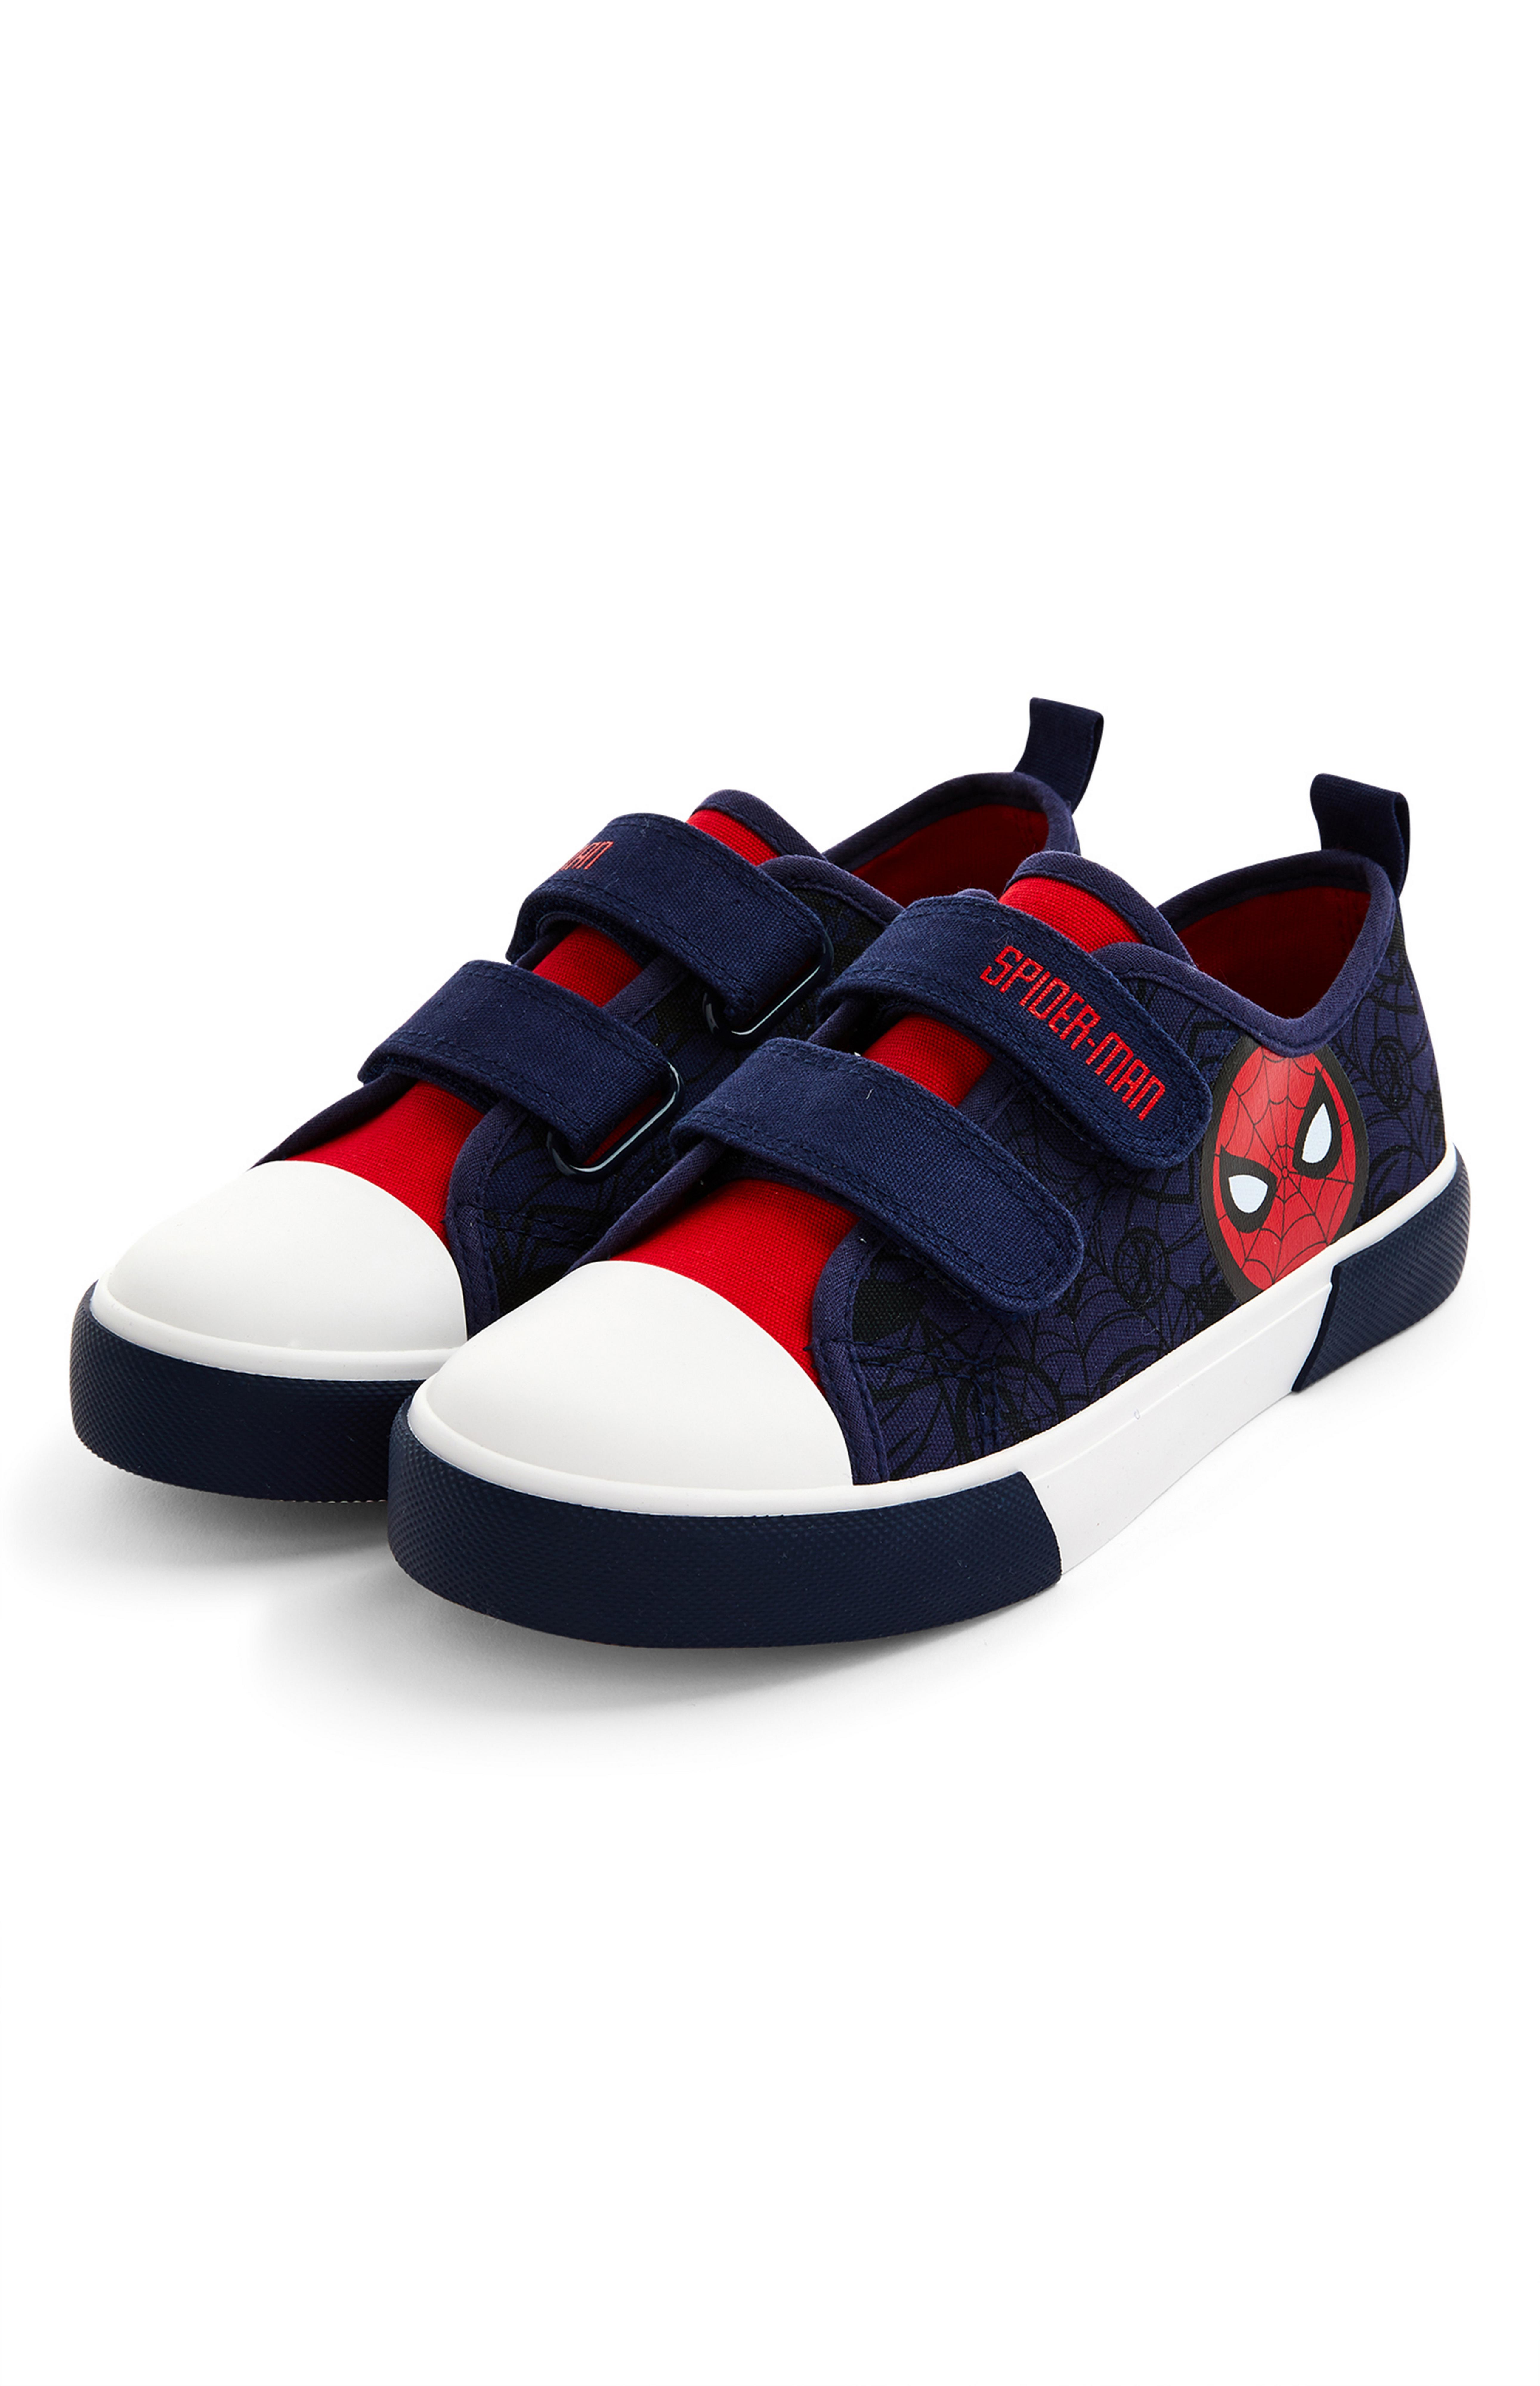 Grens Ziekte van mening zijn Younger Boy Navy Spider-Man Canvas Sneakers | Boys' Shoes | Boys Clothes |  Kids' Clothes | All Primark Products | Primark